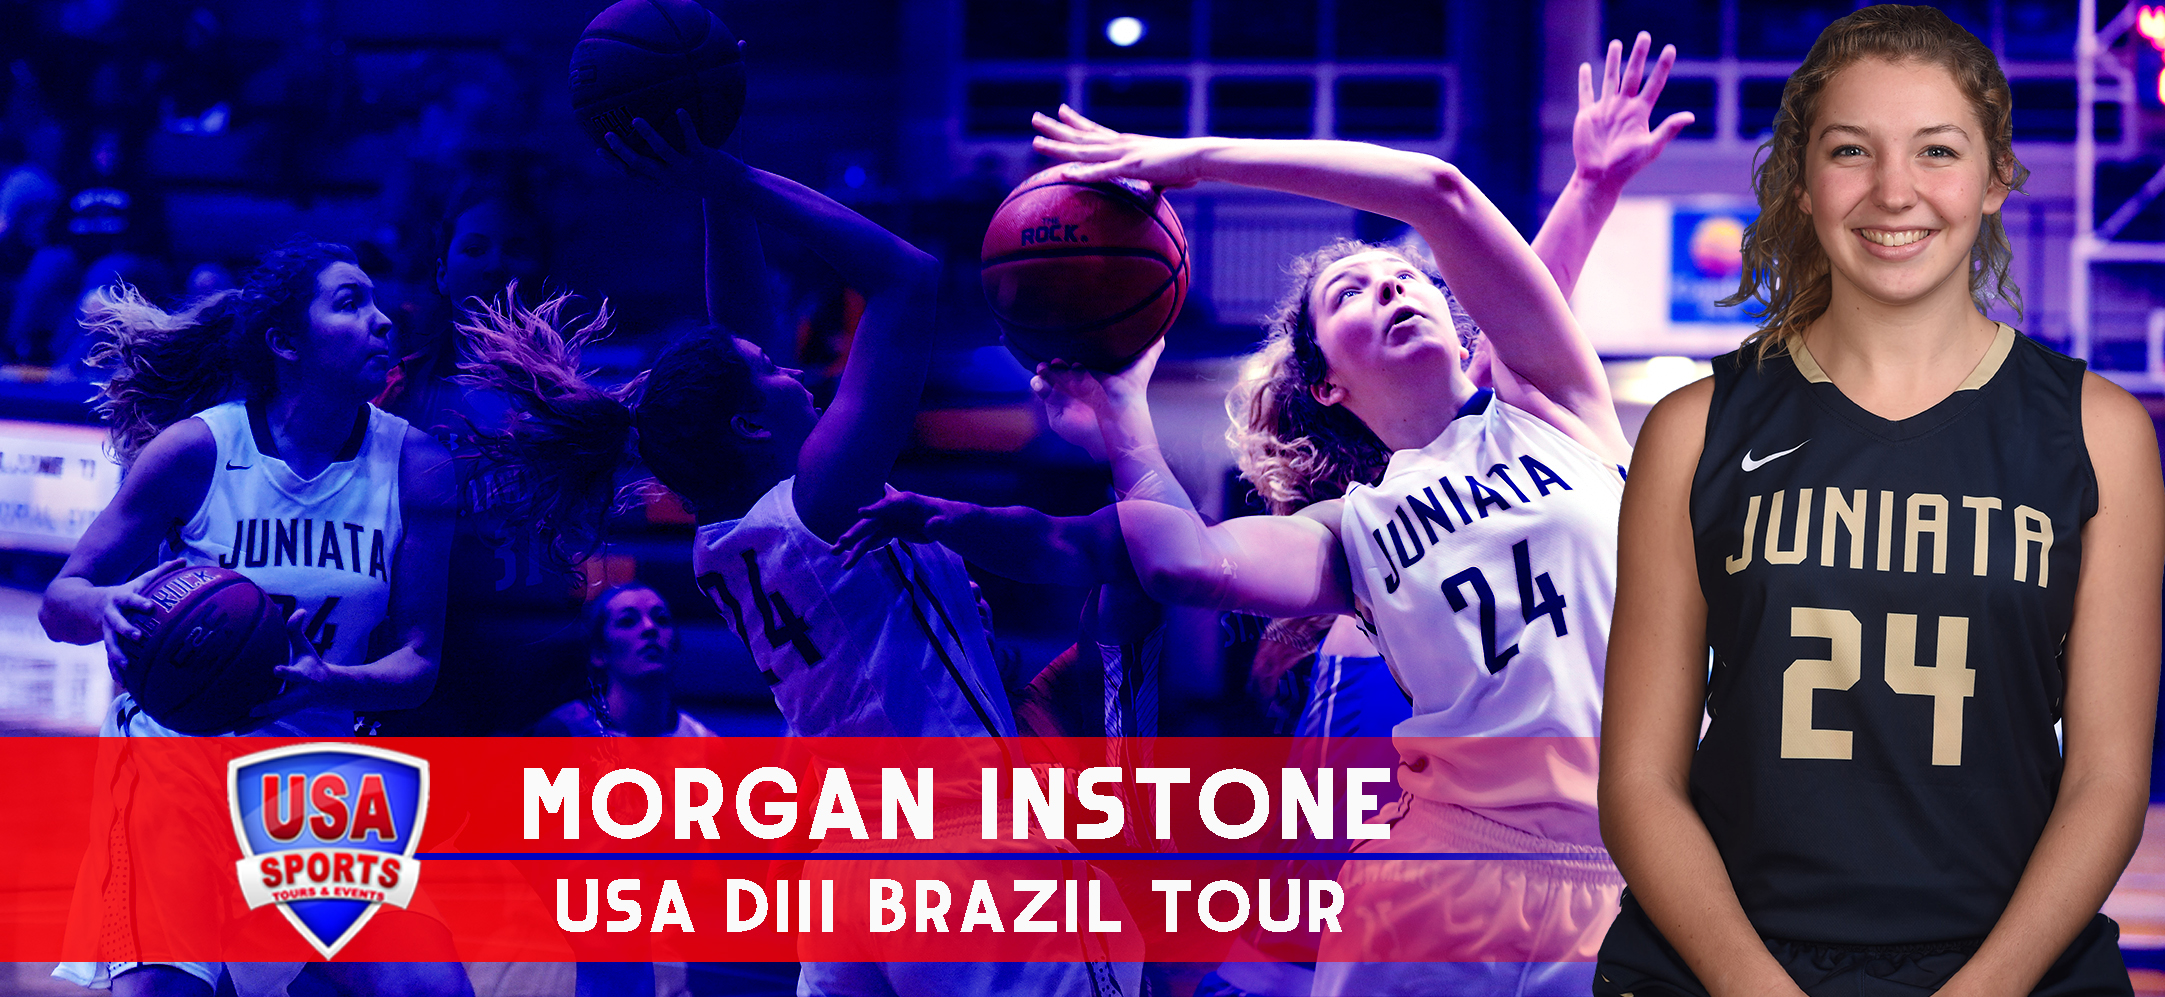 Morgan Instone to represent Juniata on the 2018 USA Brazil Tour